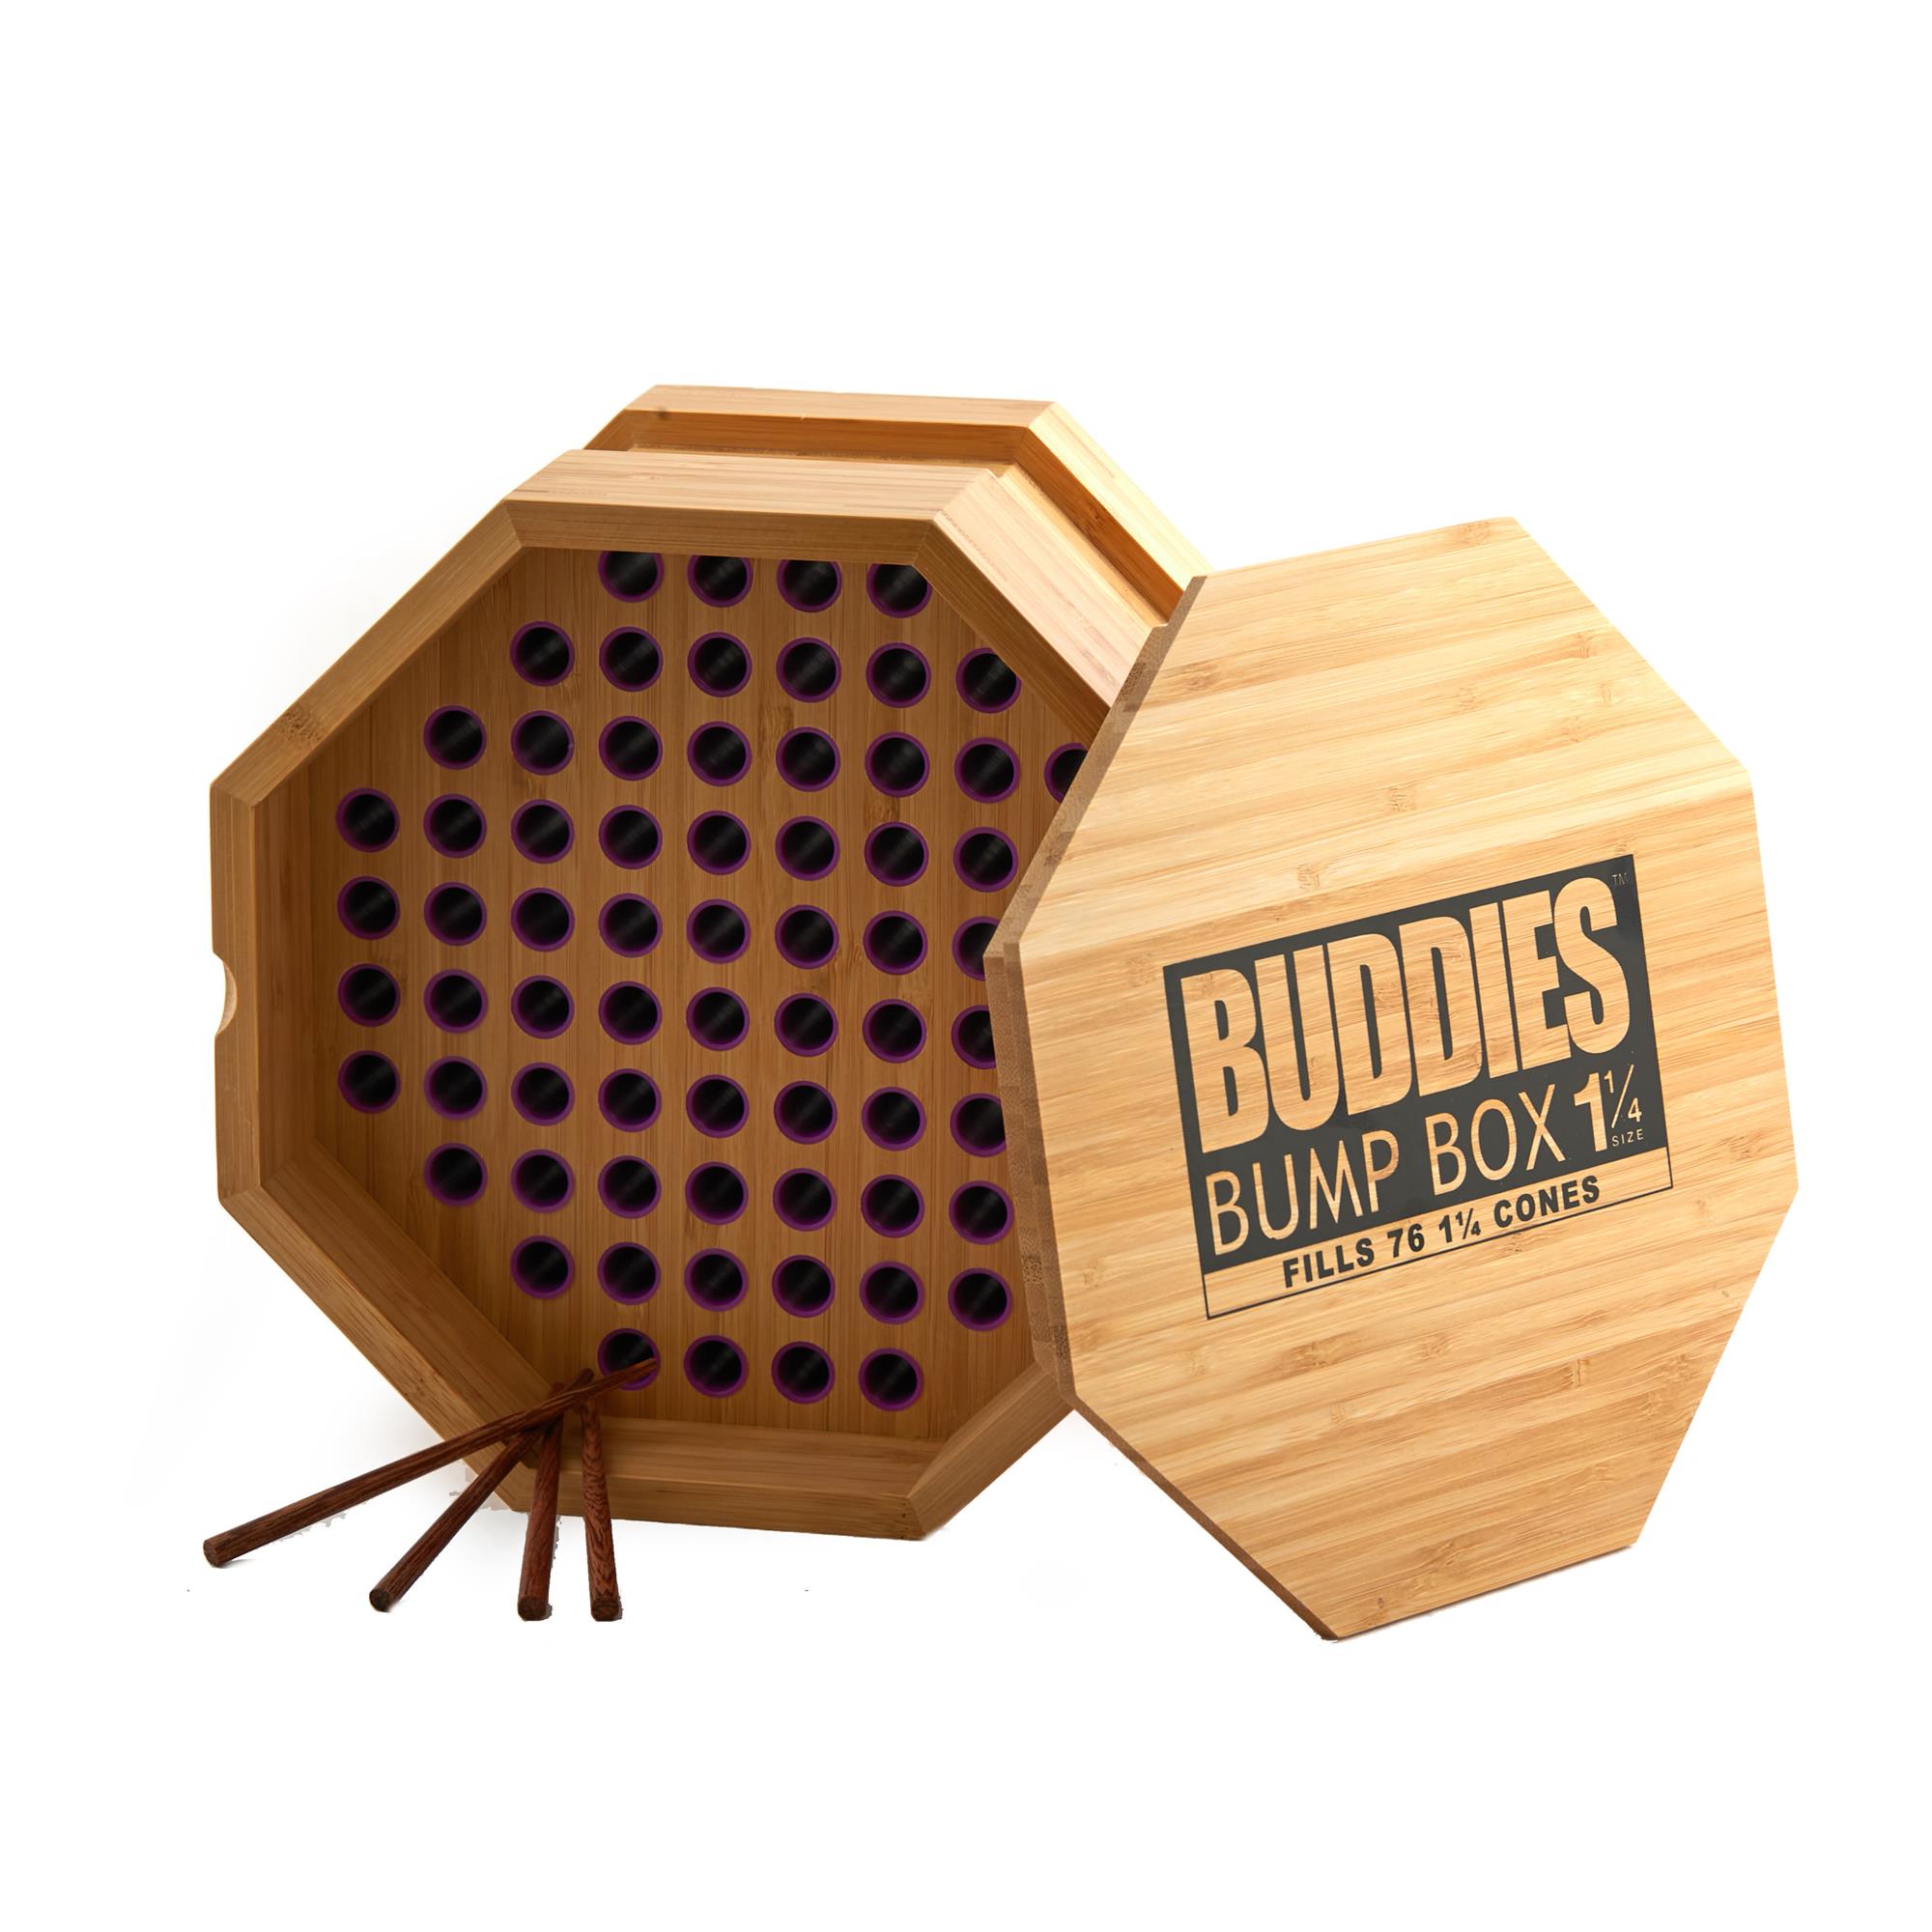 BUDDIES BAMBOO BUMP BOX 1/4